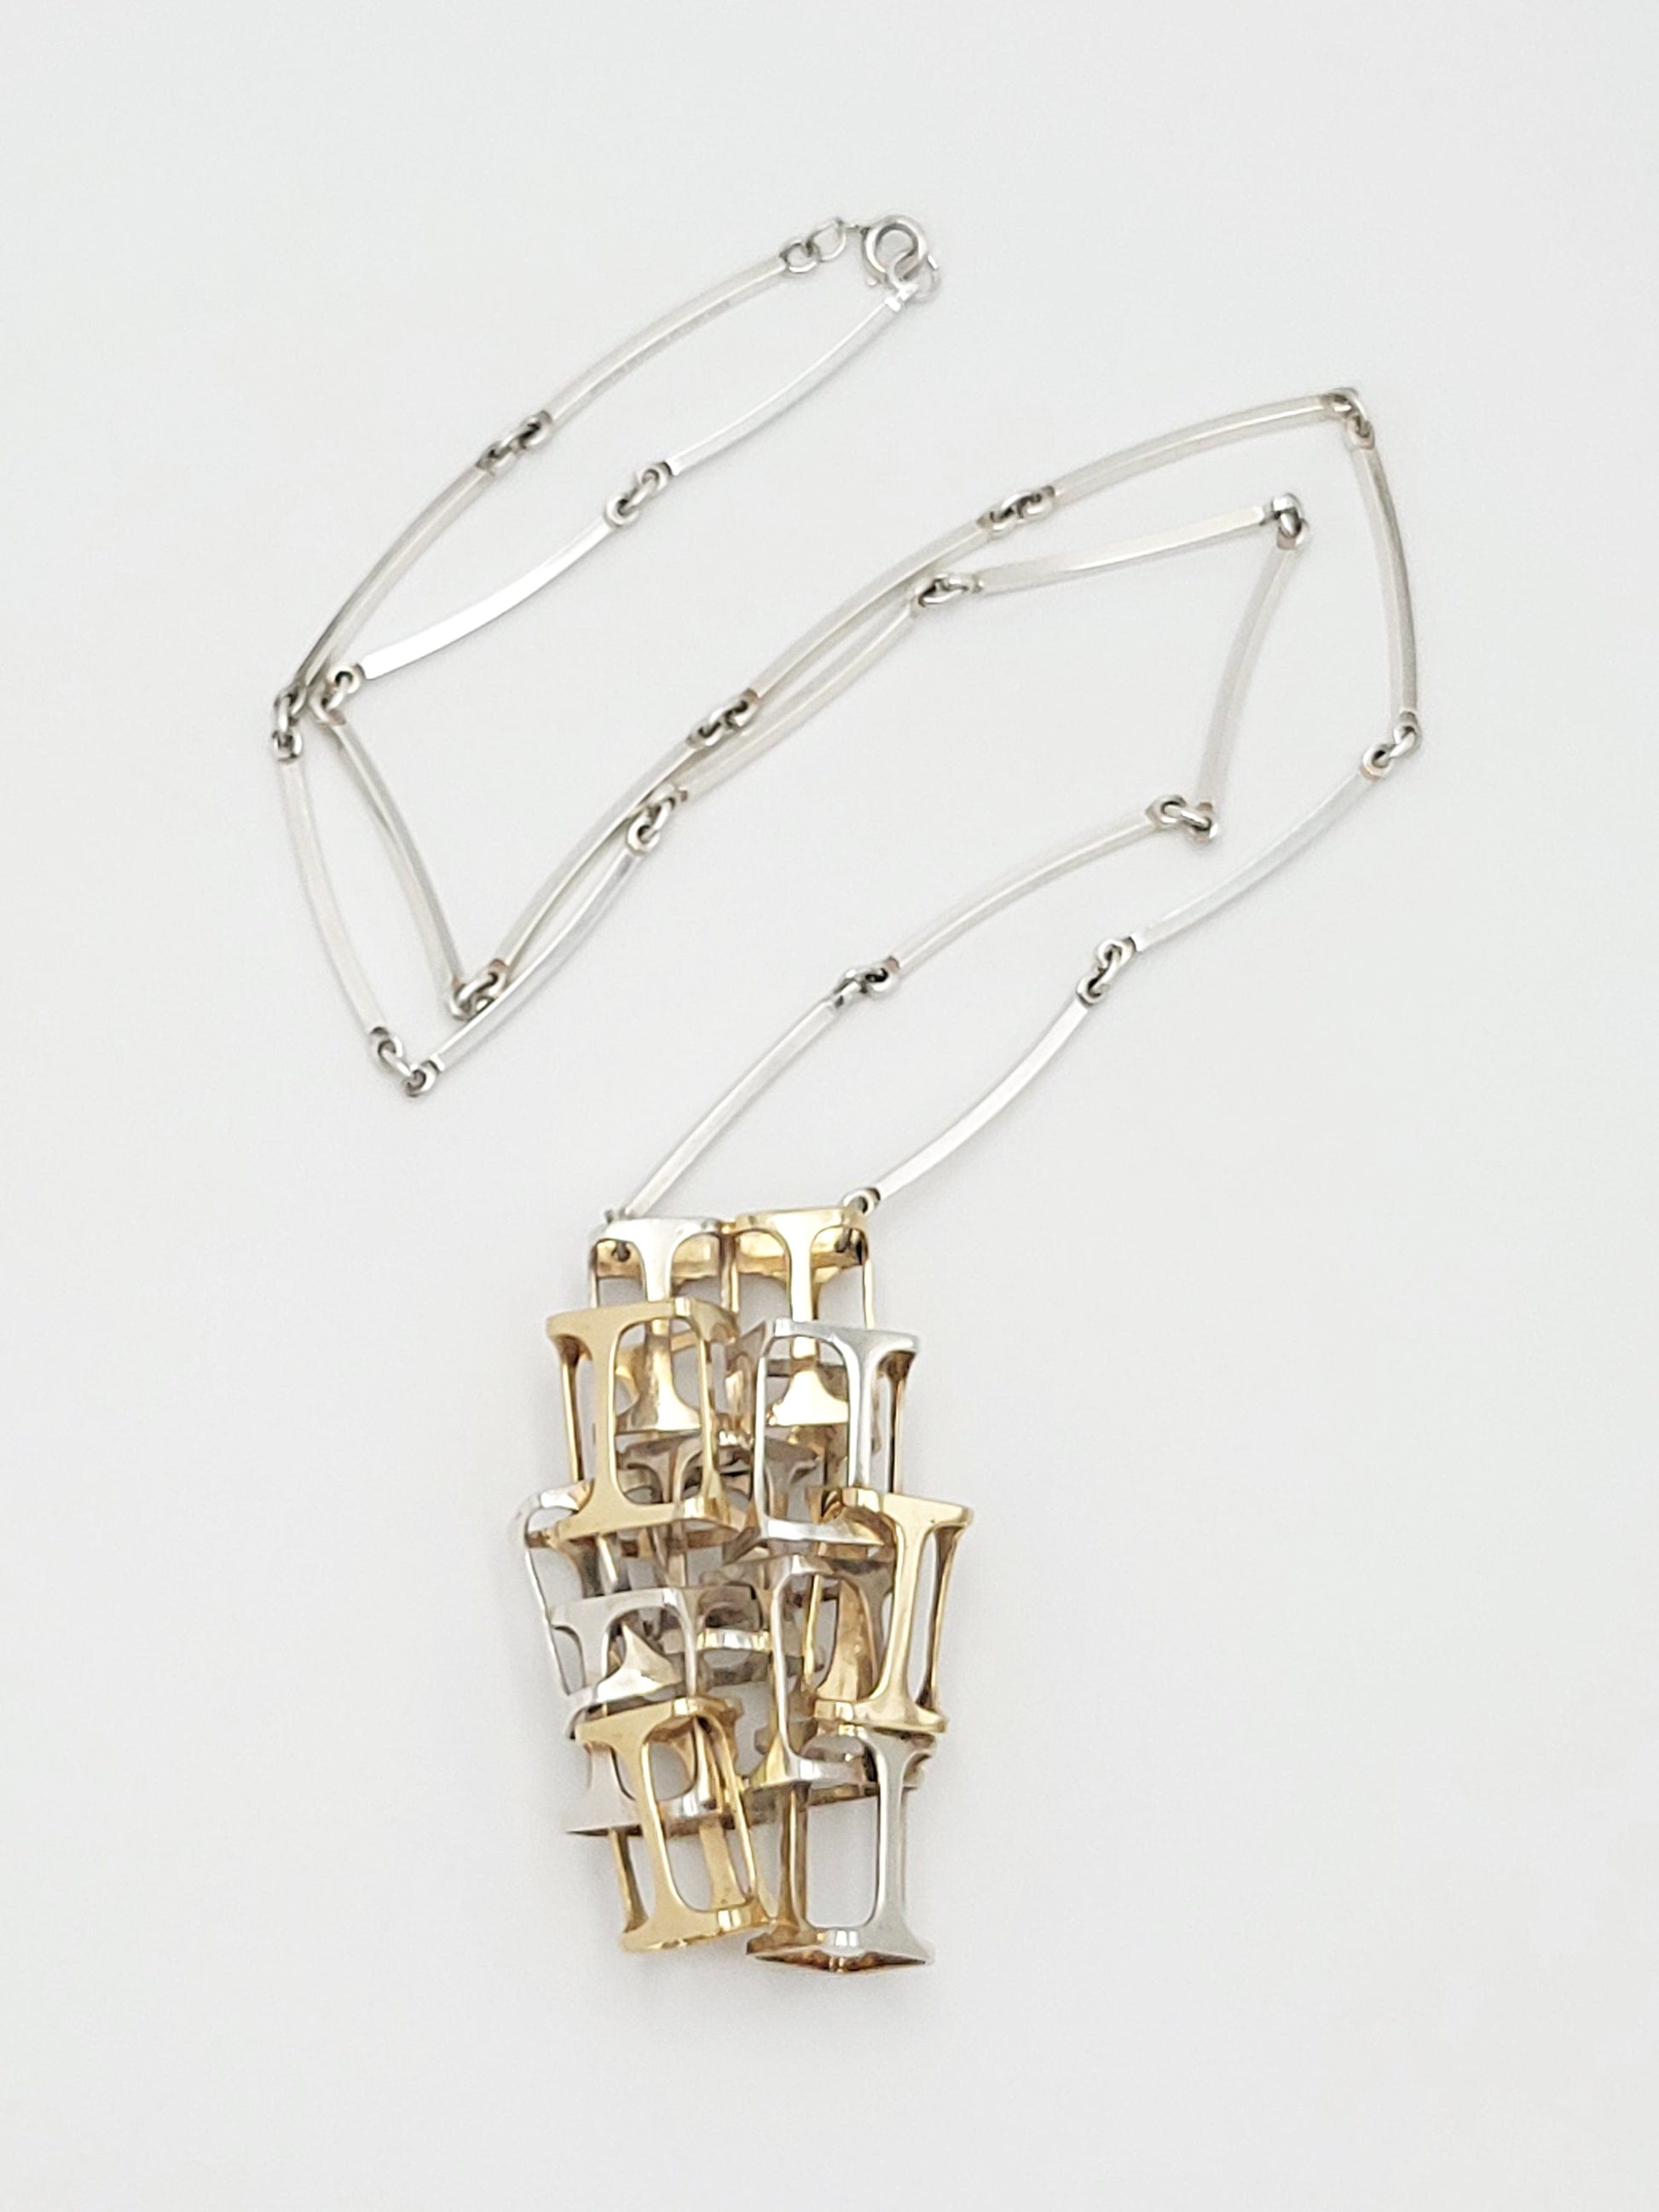 Niels Erik From Jewelry Superb Danish Design 14k & 925 Abstract Modernist Cubist 3D HUGE Necklace